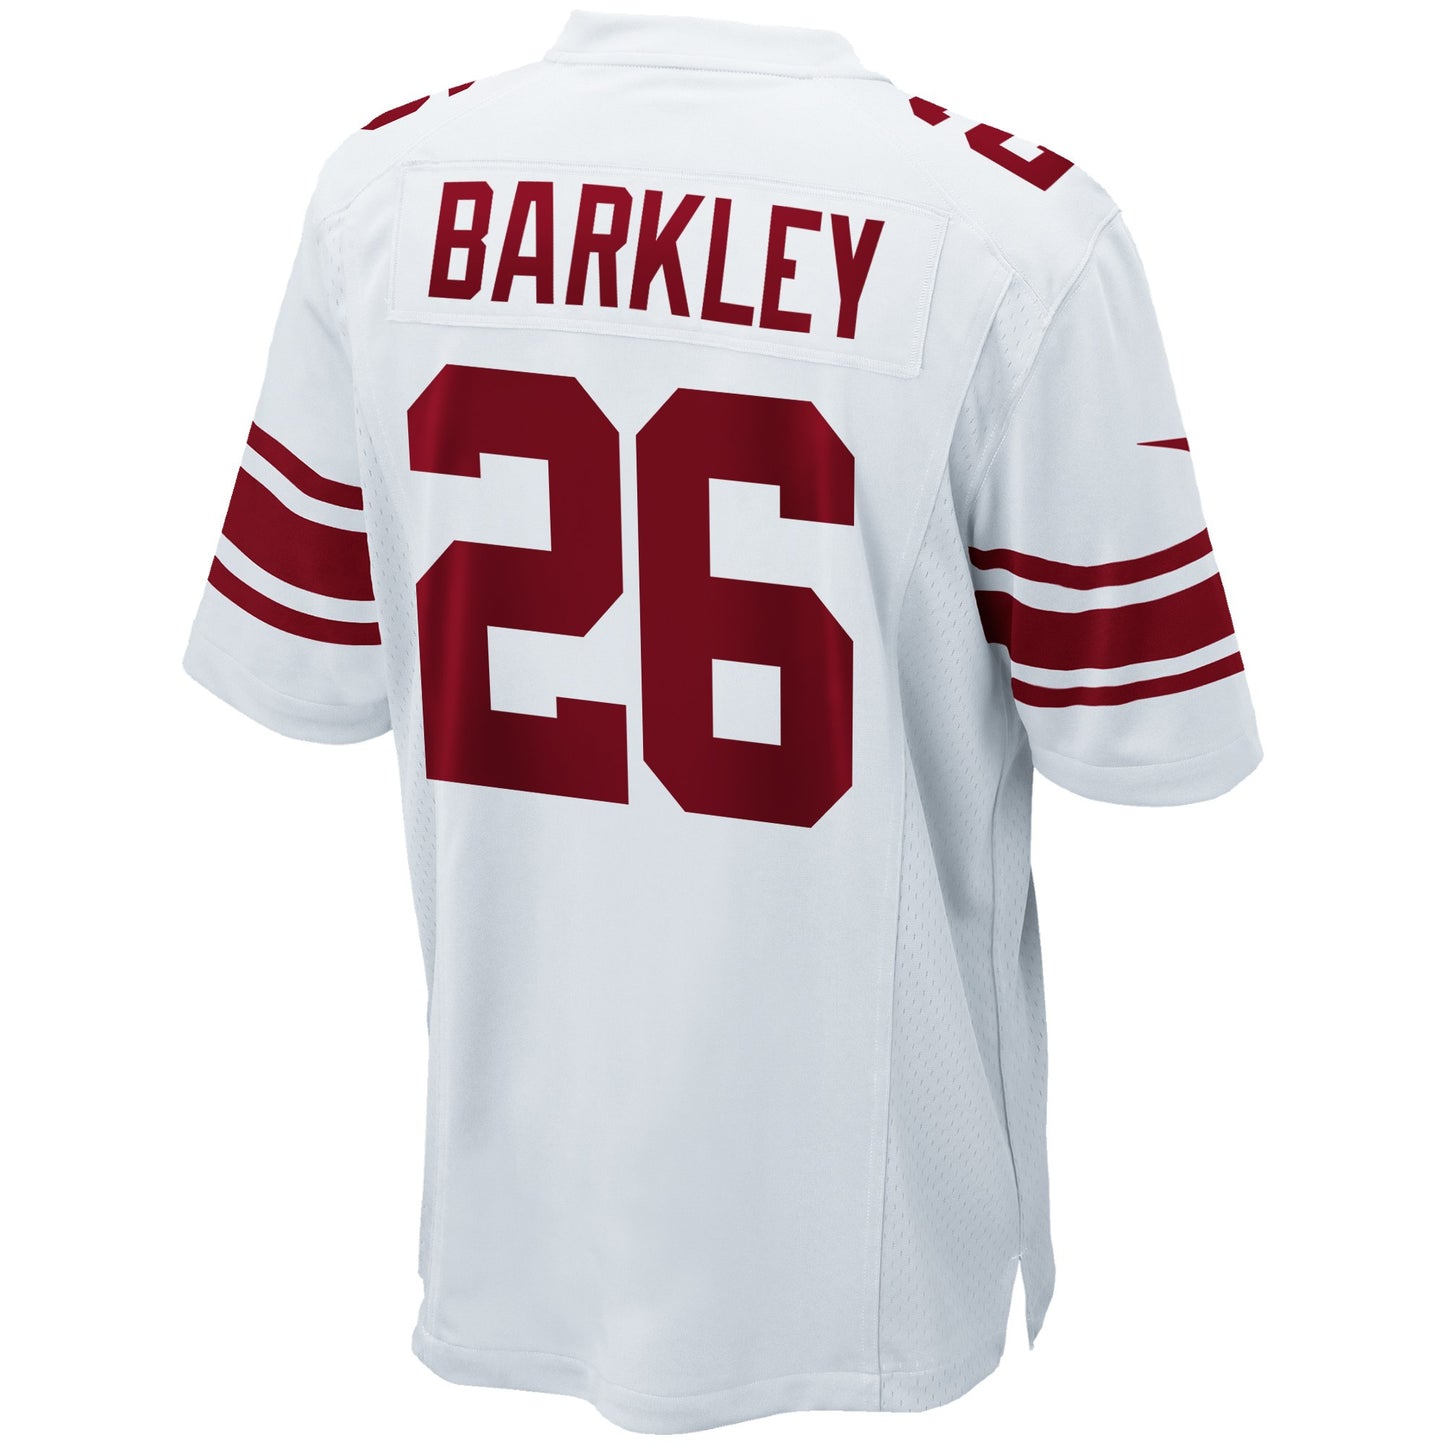 New York Giants Youth #26 Saquon Barkley Game Jersey  - White